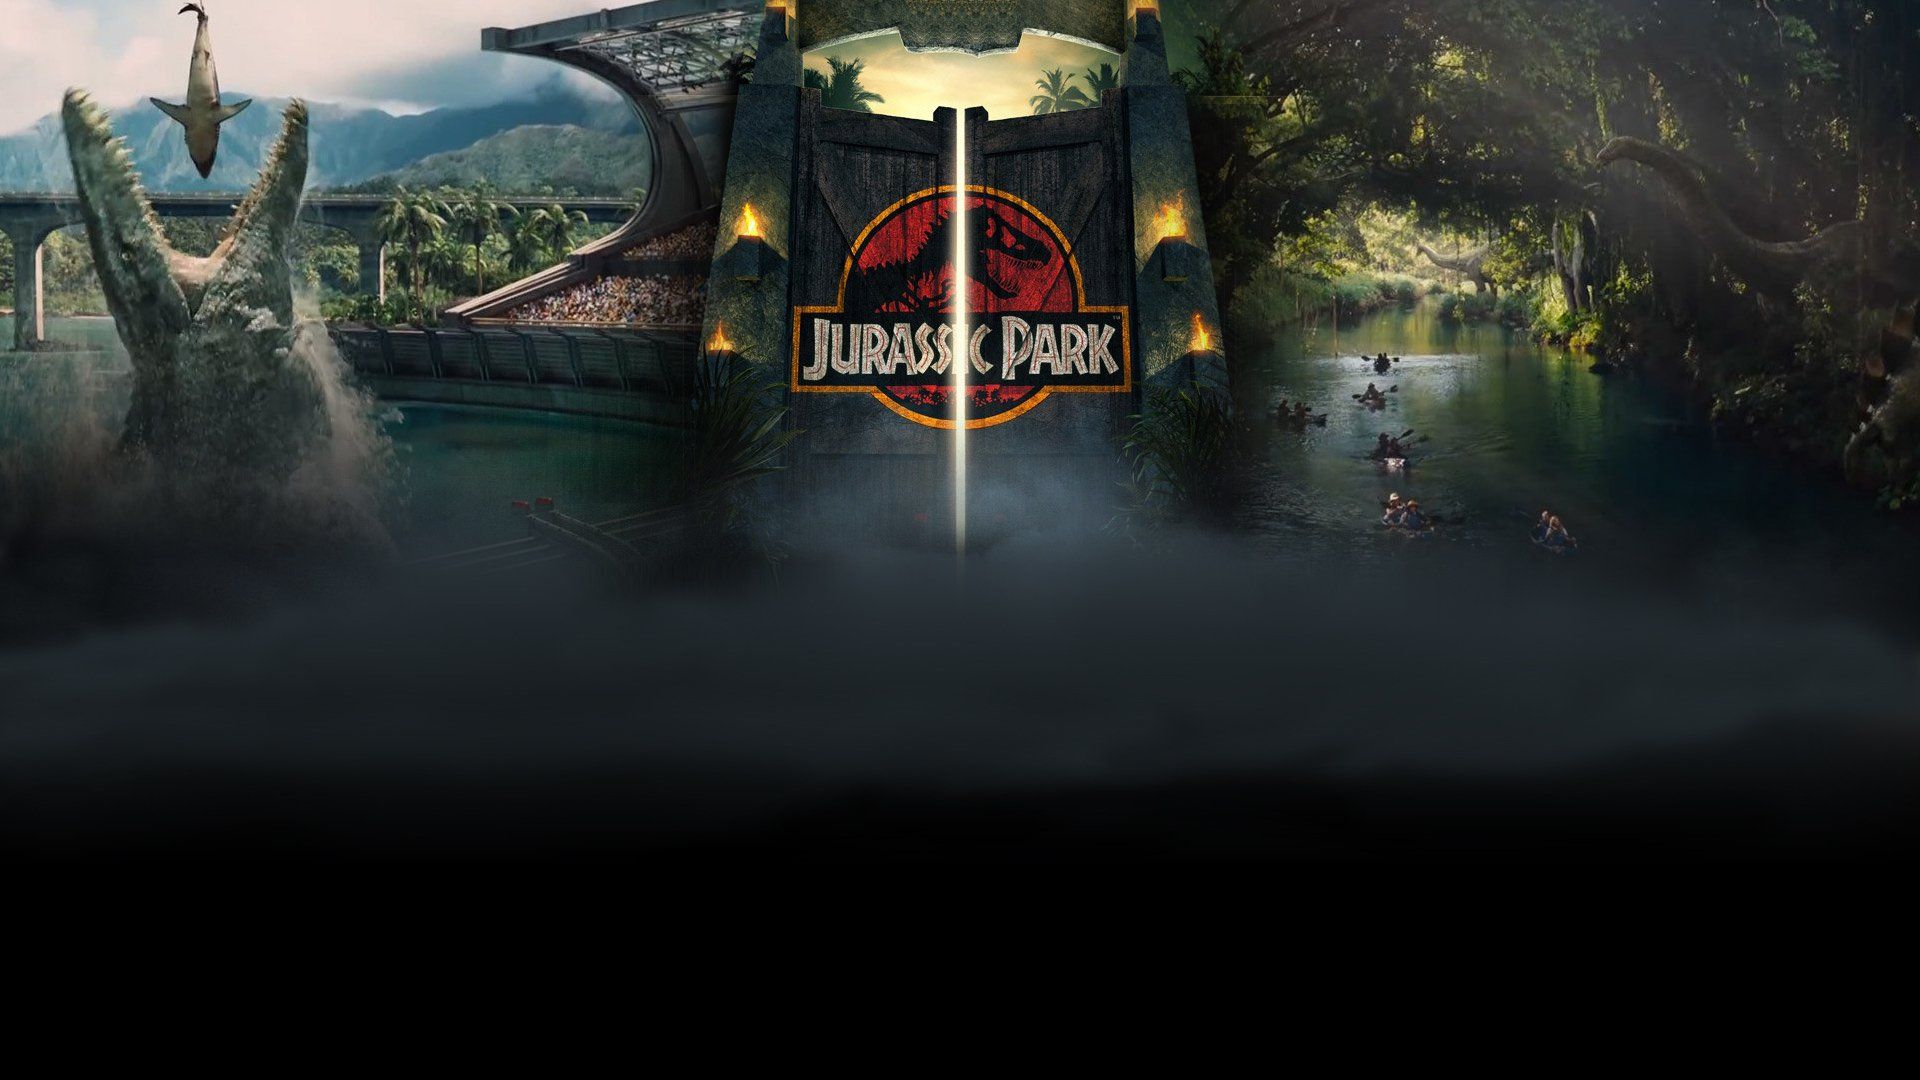 Jurassic Park Desktop Background. Beautiful Widescreen Desktop Wallpaper, Desktop Wallpaper and Naruto Desktop Background